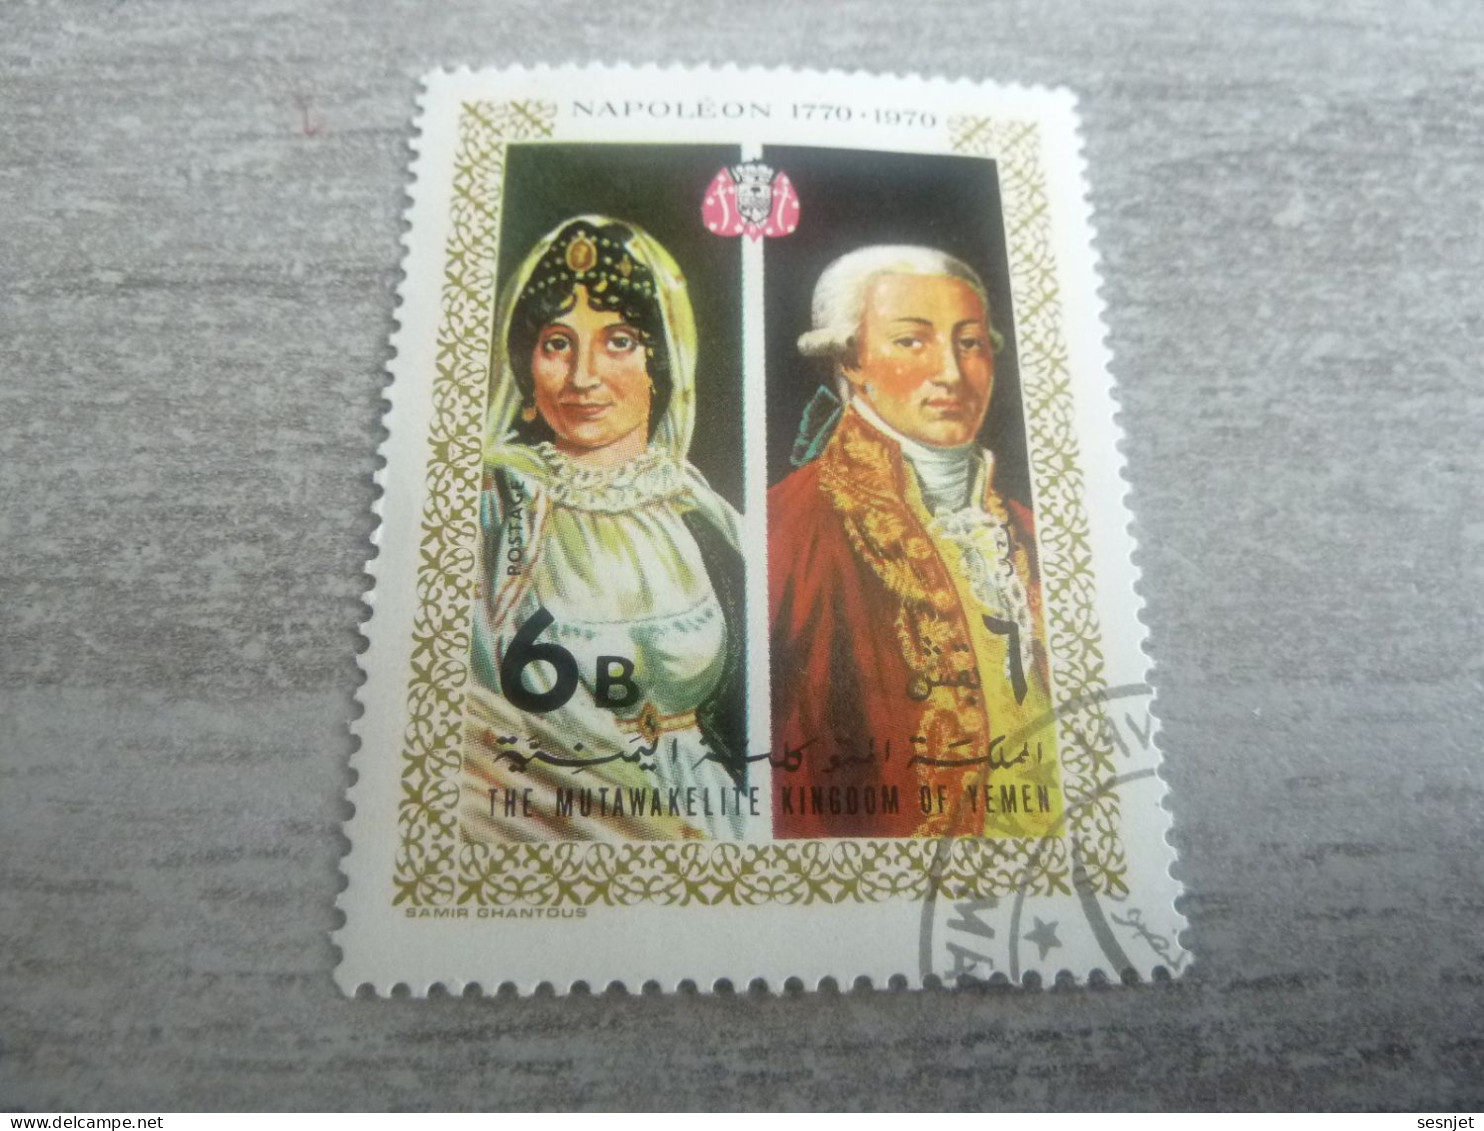 Yemen - Napoleon - The Mutawakelite - Kingdom The Yemen - 6B - Postage - Polychrome - Oblitéré - 1970 - - Napoleon